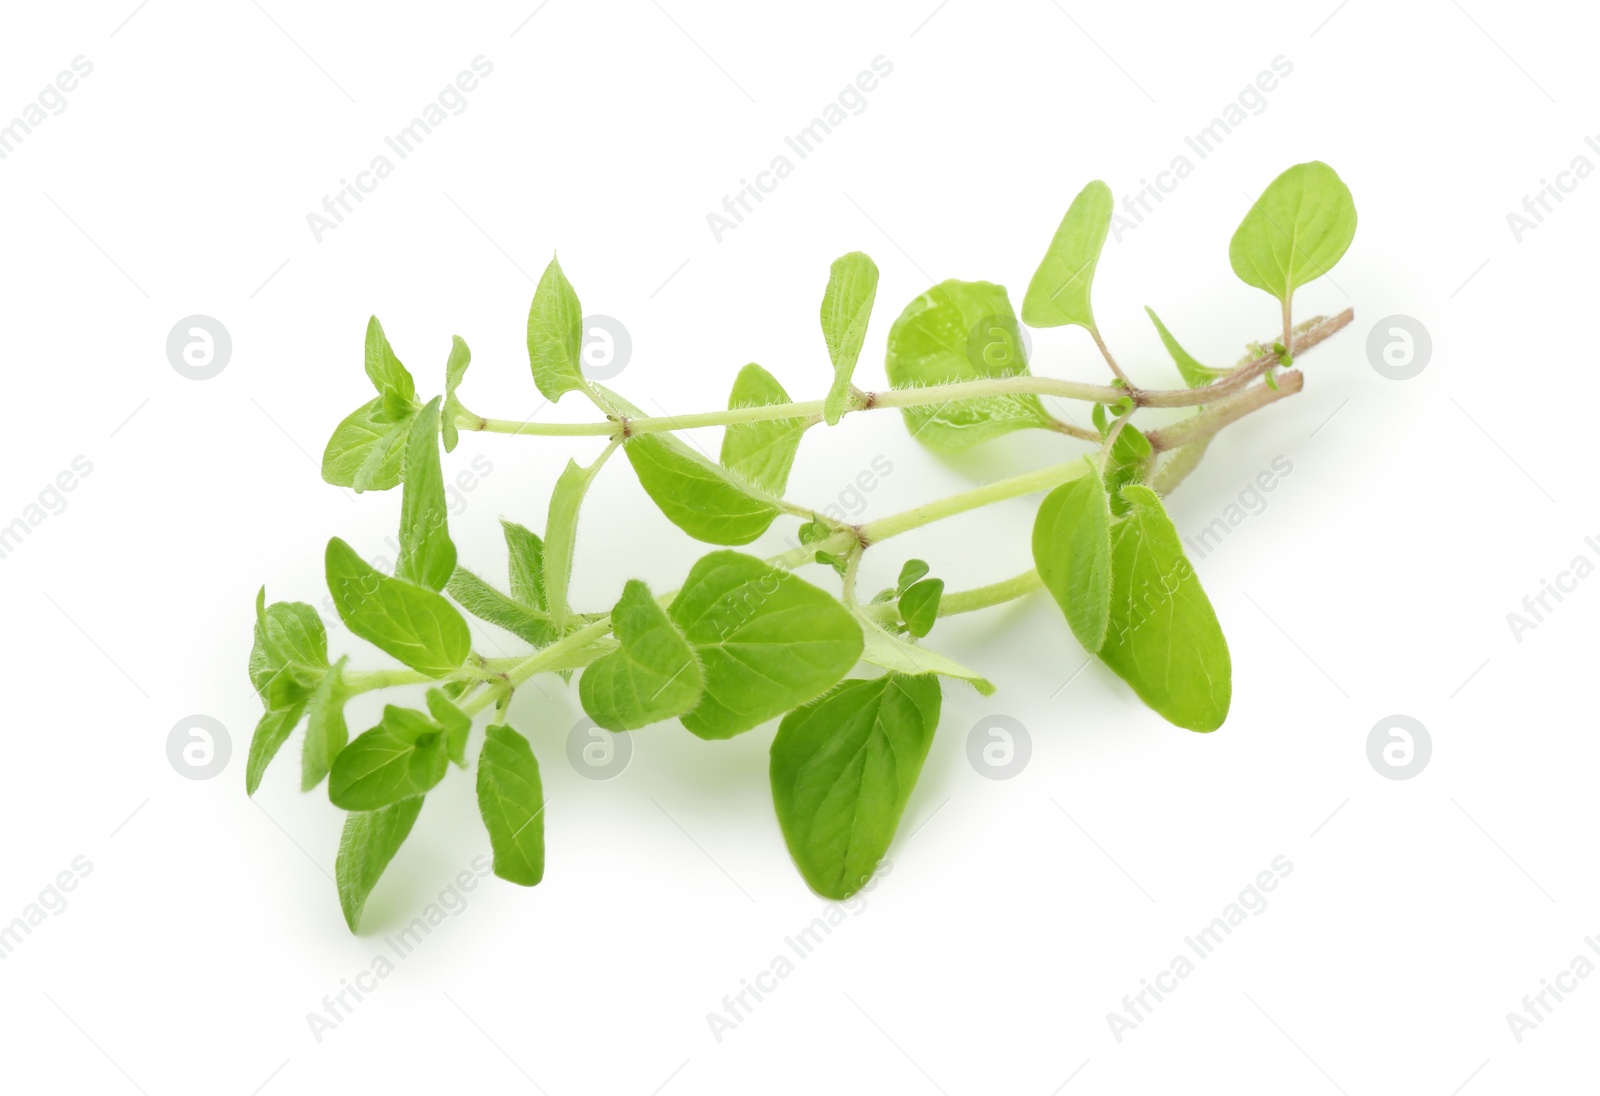 Photo of Sprigs of fresh green oregano isolated on white